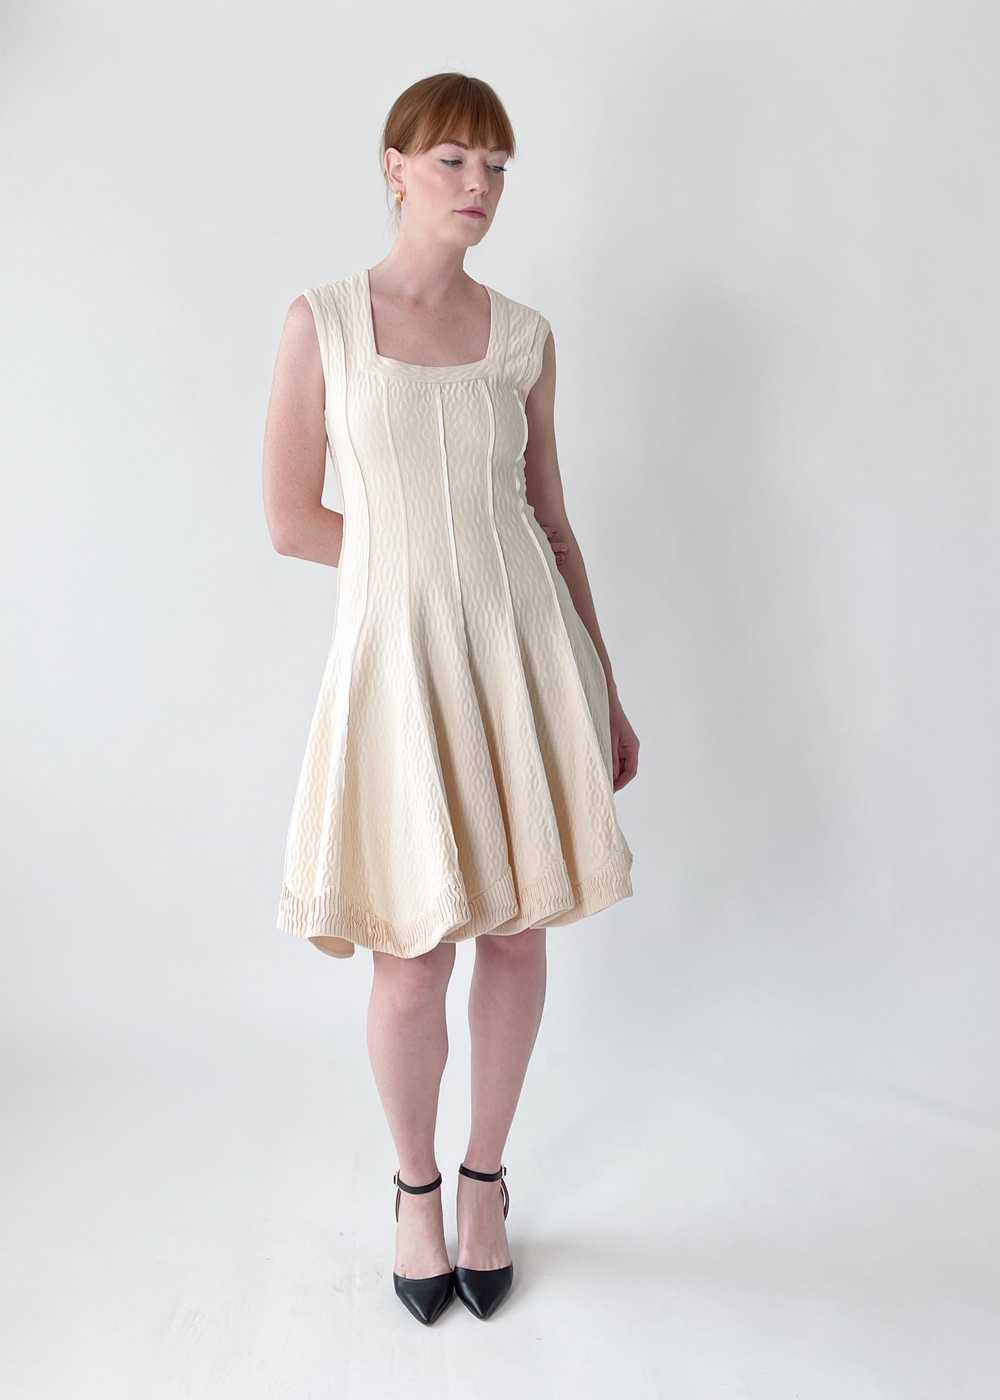 Alaia Textured Knit Dress - image 2